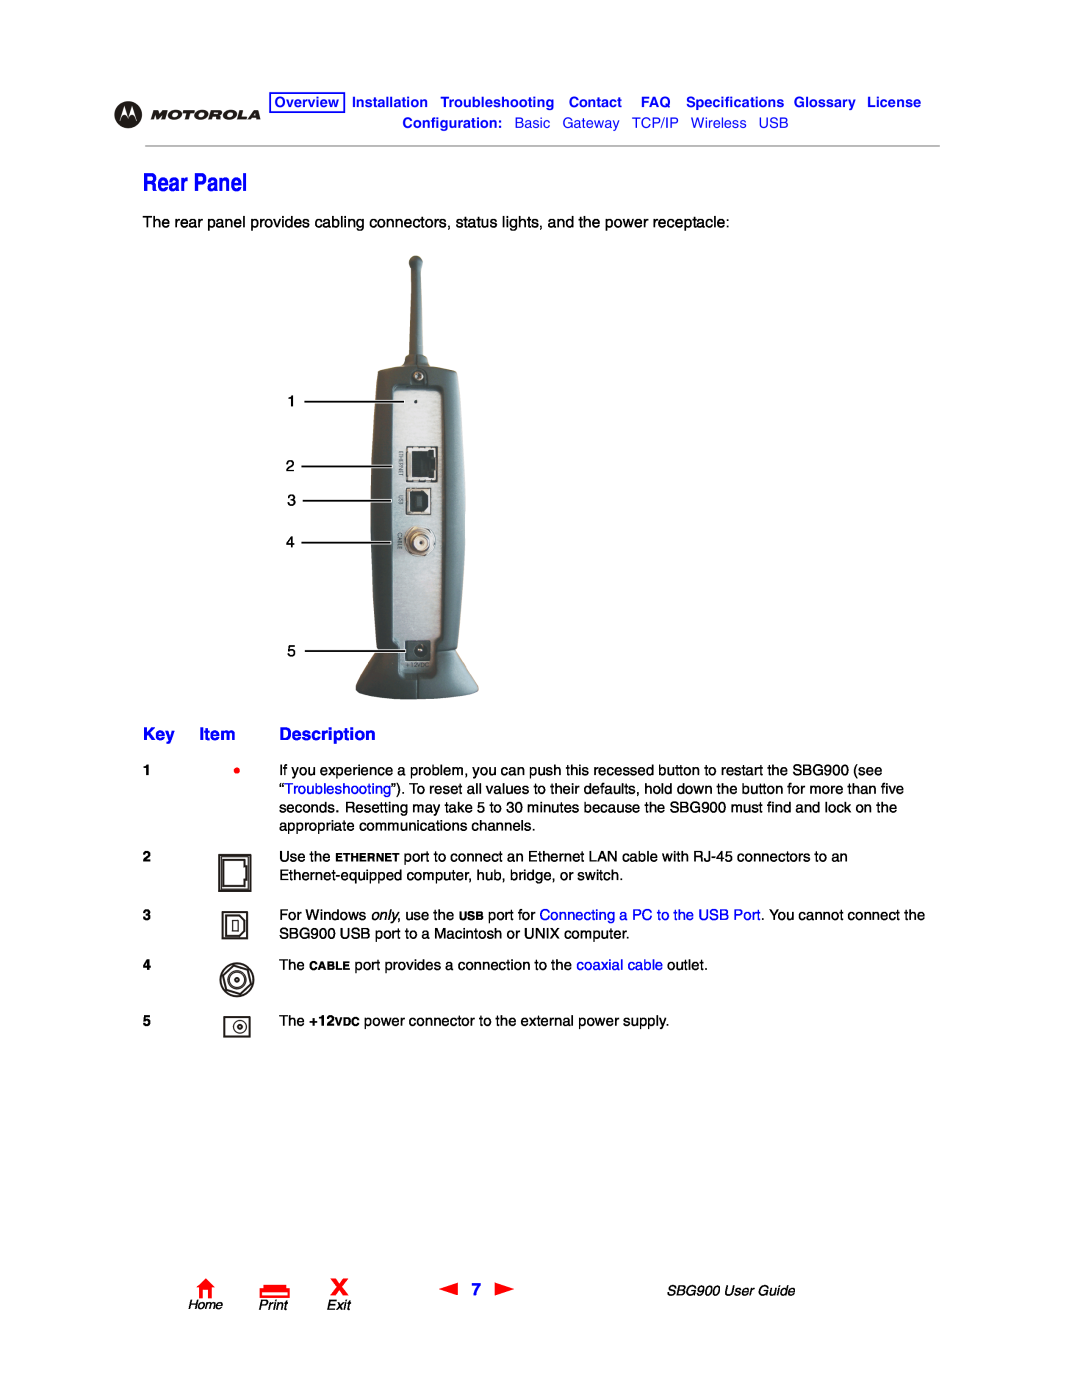 Motorola SBG900 manual Rear Panel, Key Item Description, Home Print Exit 